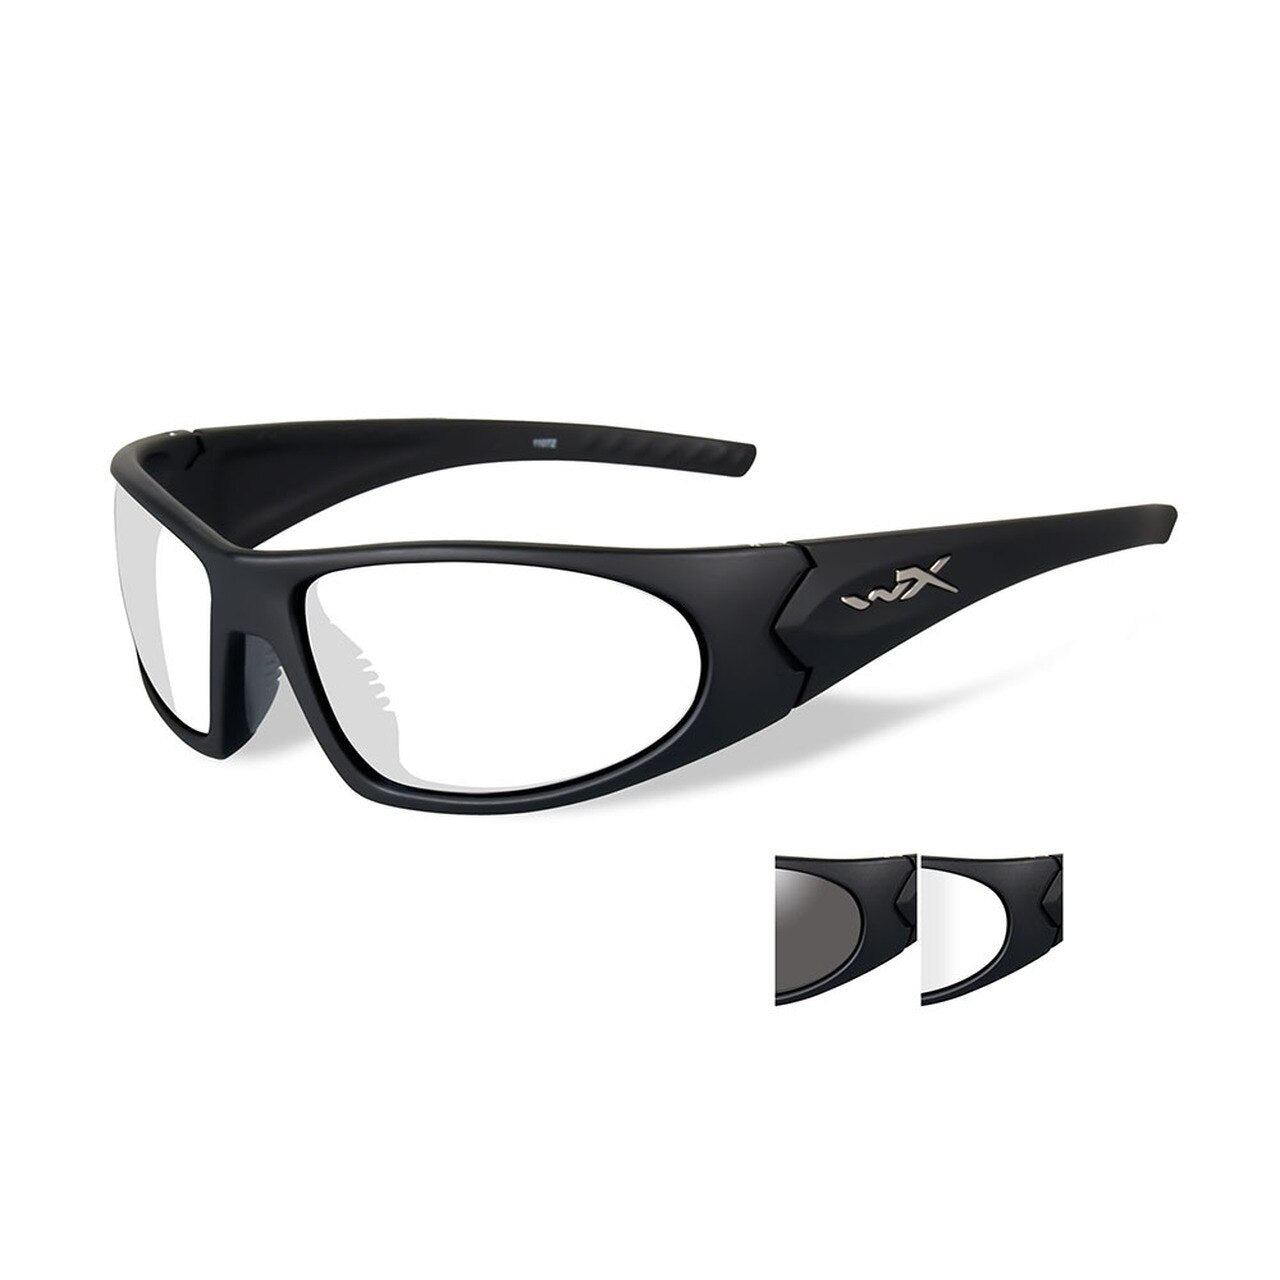 Wiley X Romer 3 Sunglasses Two Lens Matte Black Frame Eyewear Wiley X Tactical Gear Supplier Tactical Distributors Australia